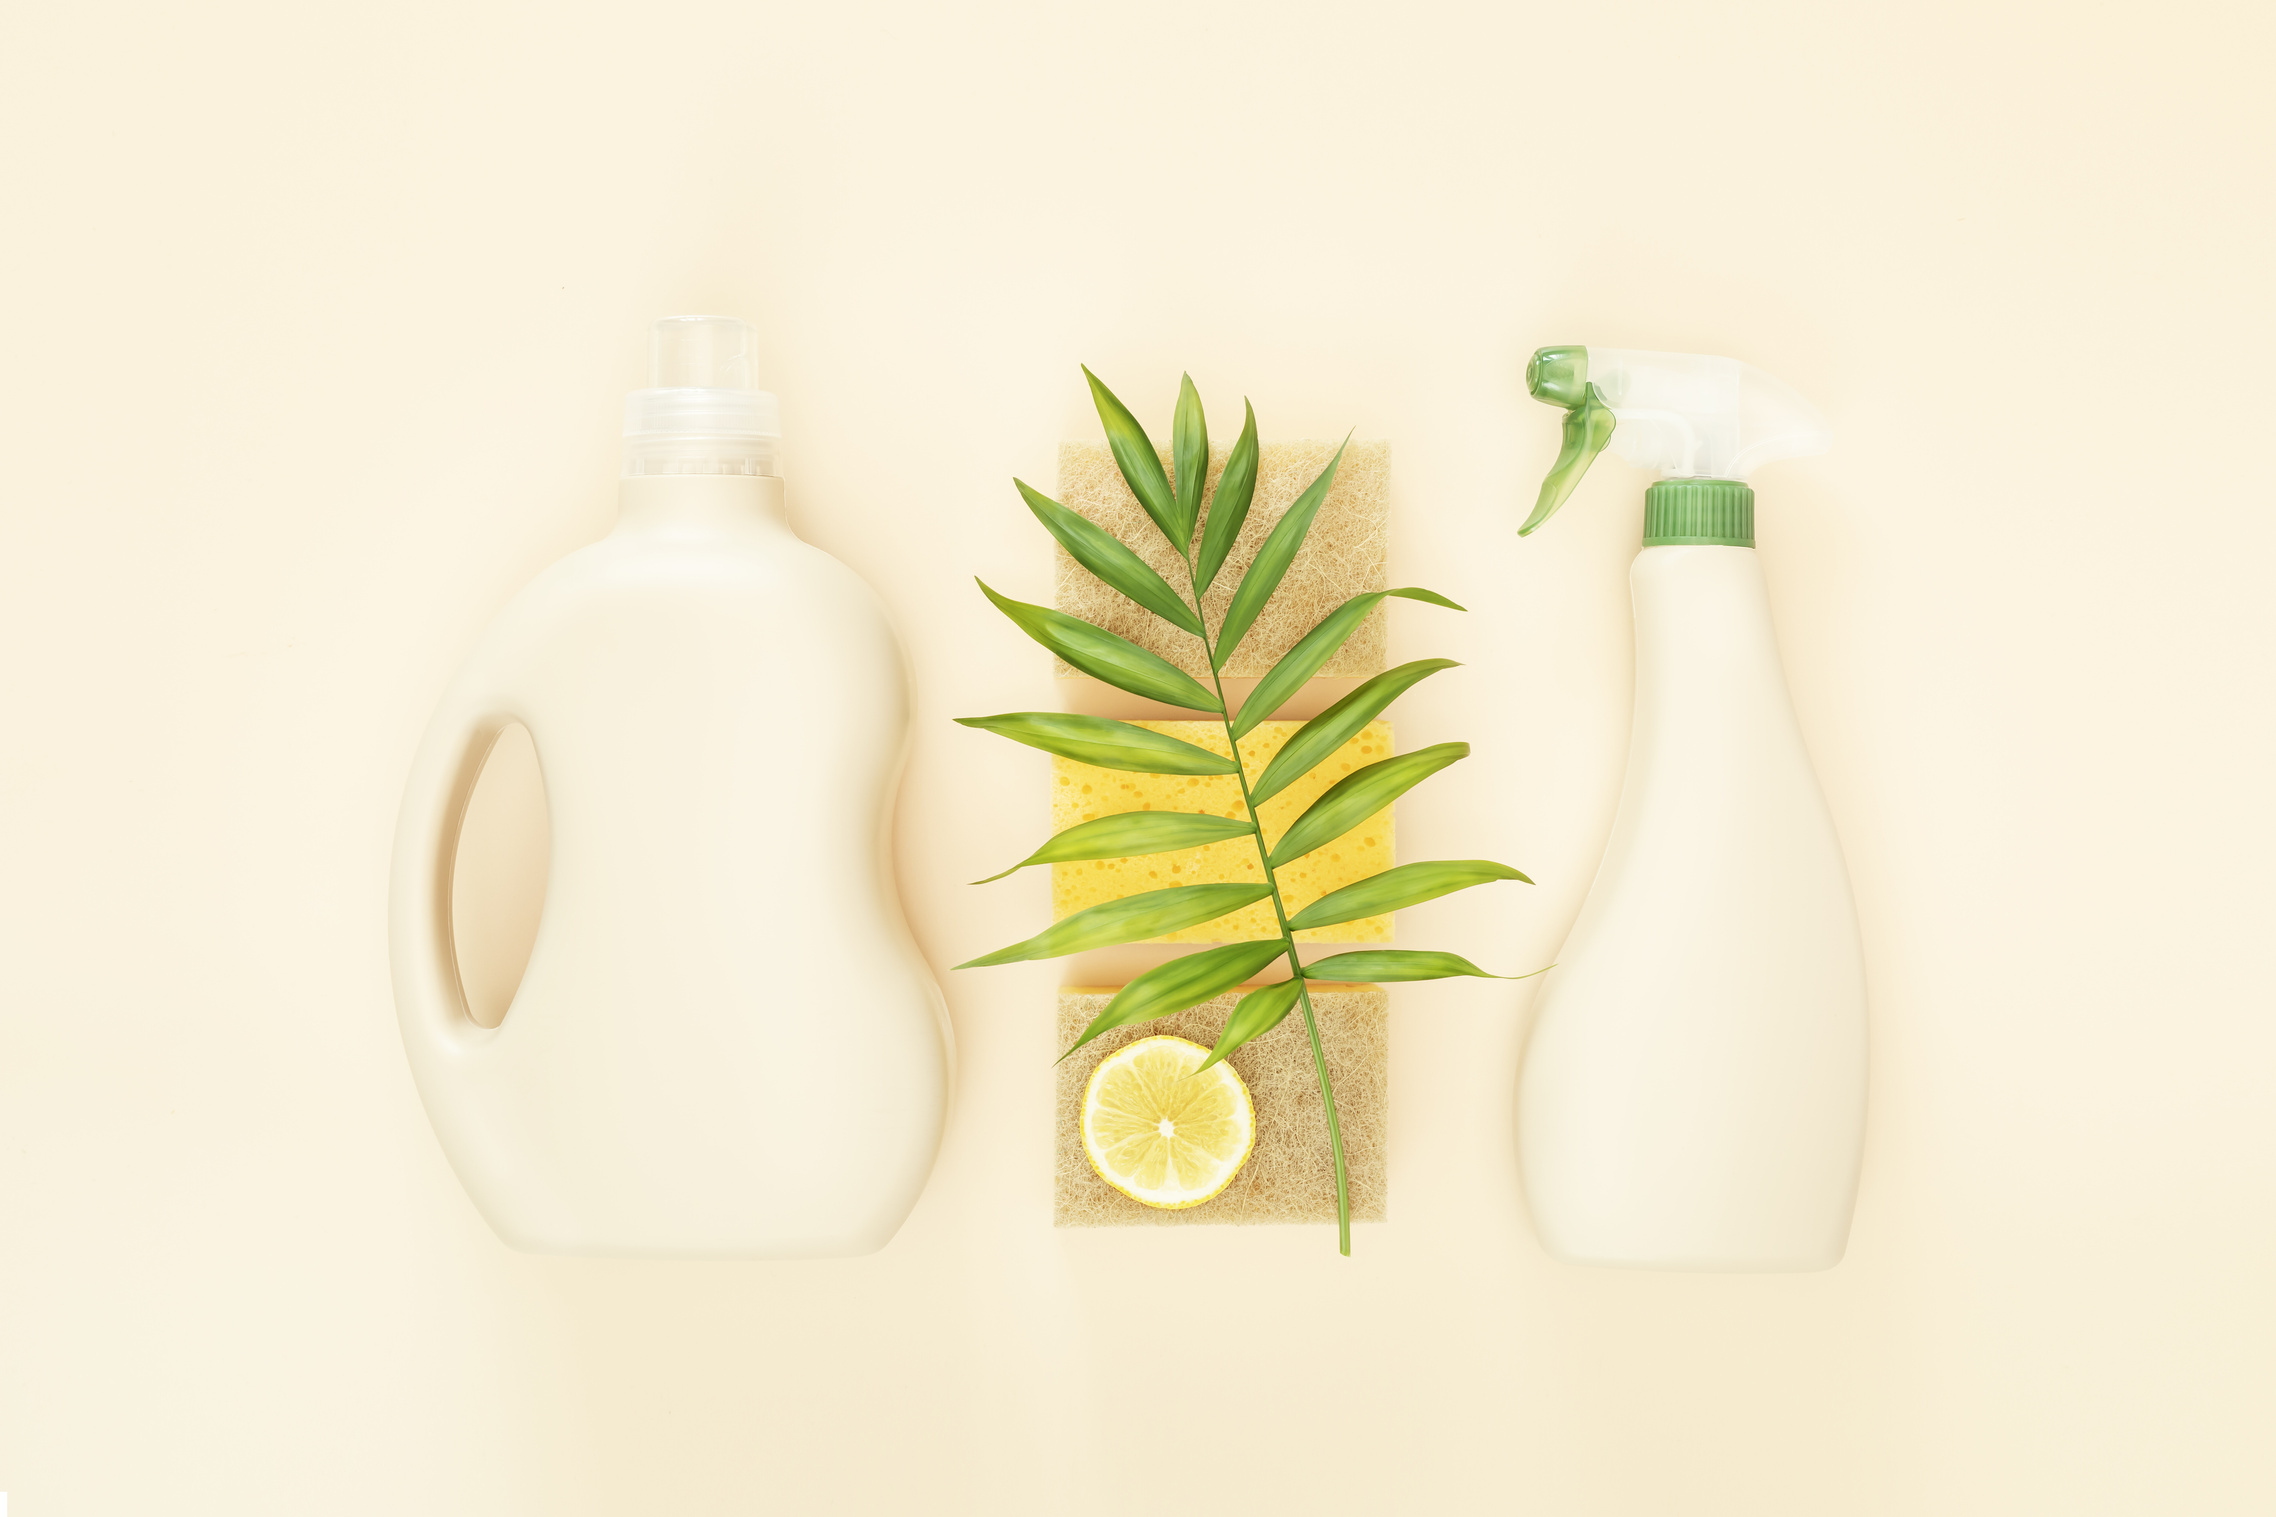 A Bottles of Natural Detergent for the Home, Sponges and Slice of Lemon